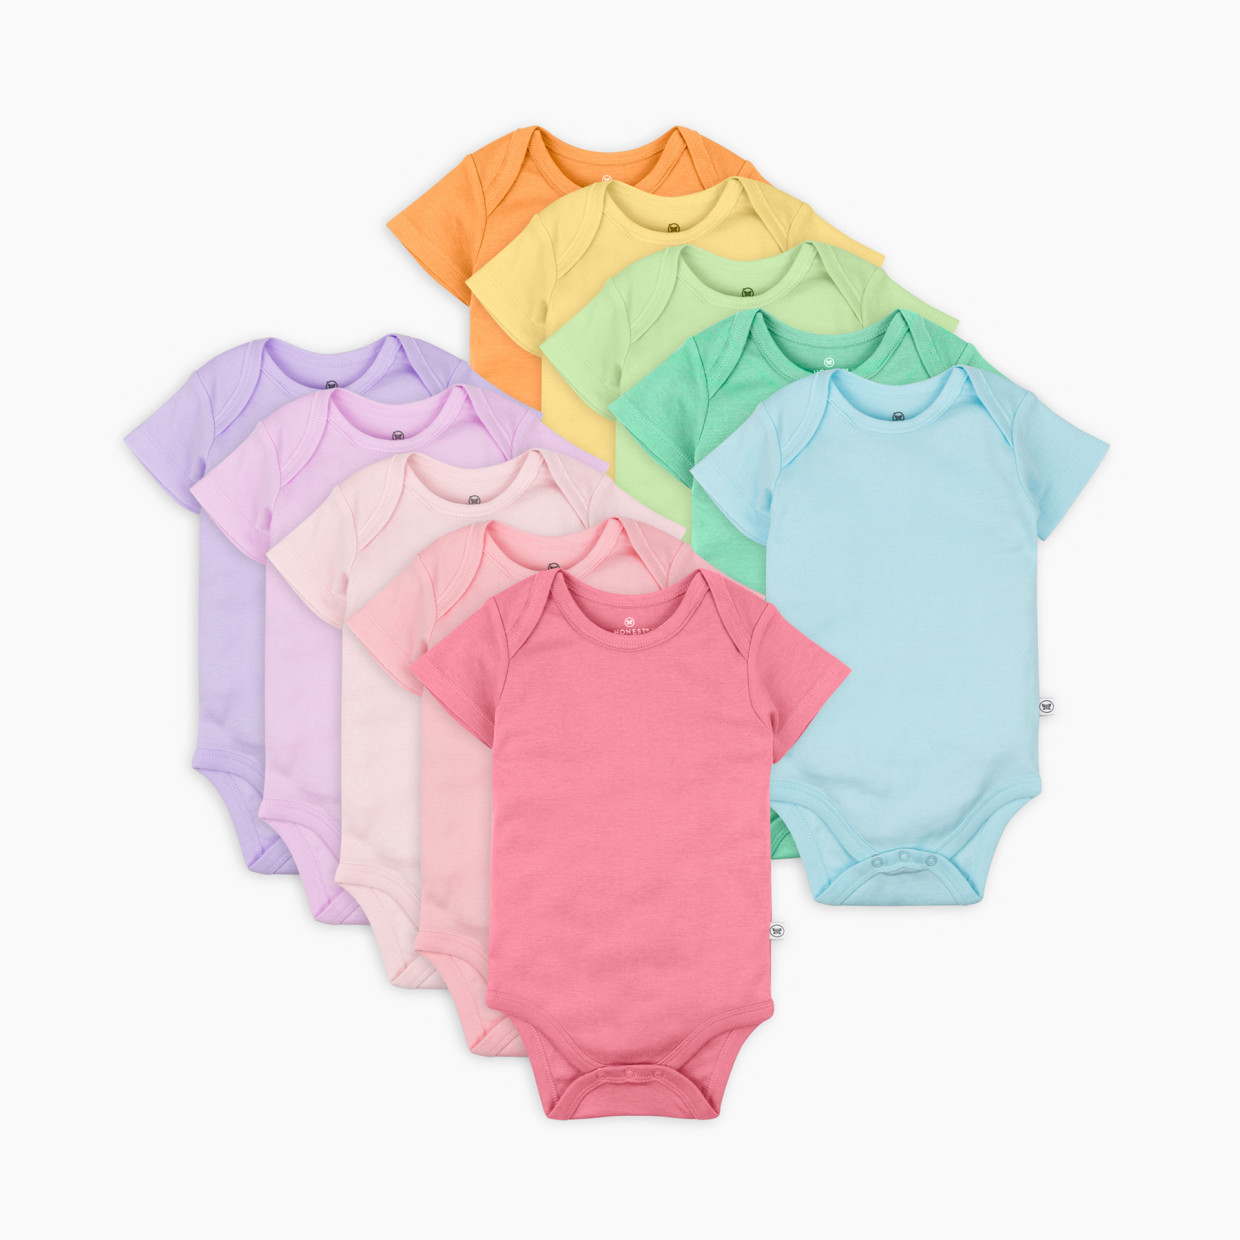 Honest Baby Clothing 10-Pack Organic Cotton Short Sleeve Bodysuits - Rainbow Pinks, 3-6 M, 10.